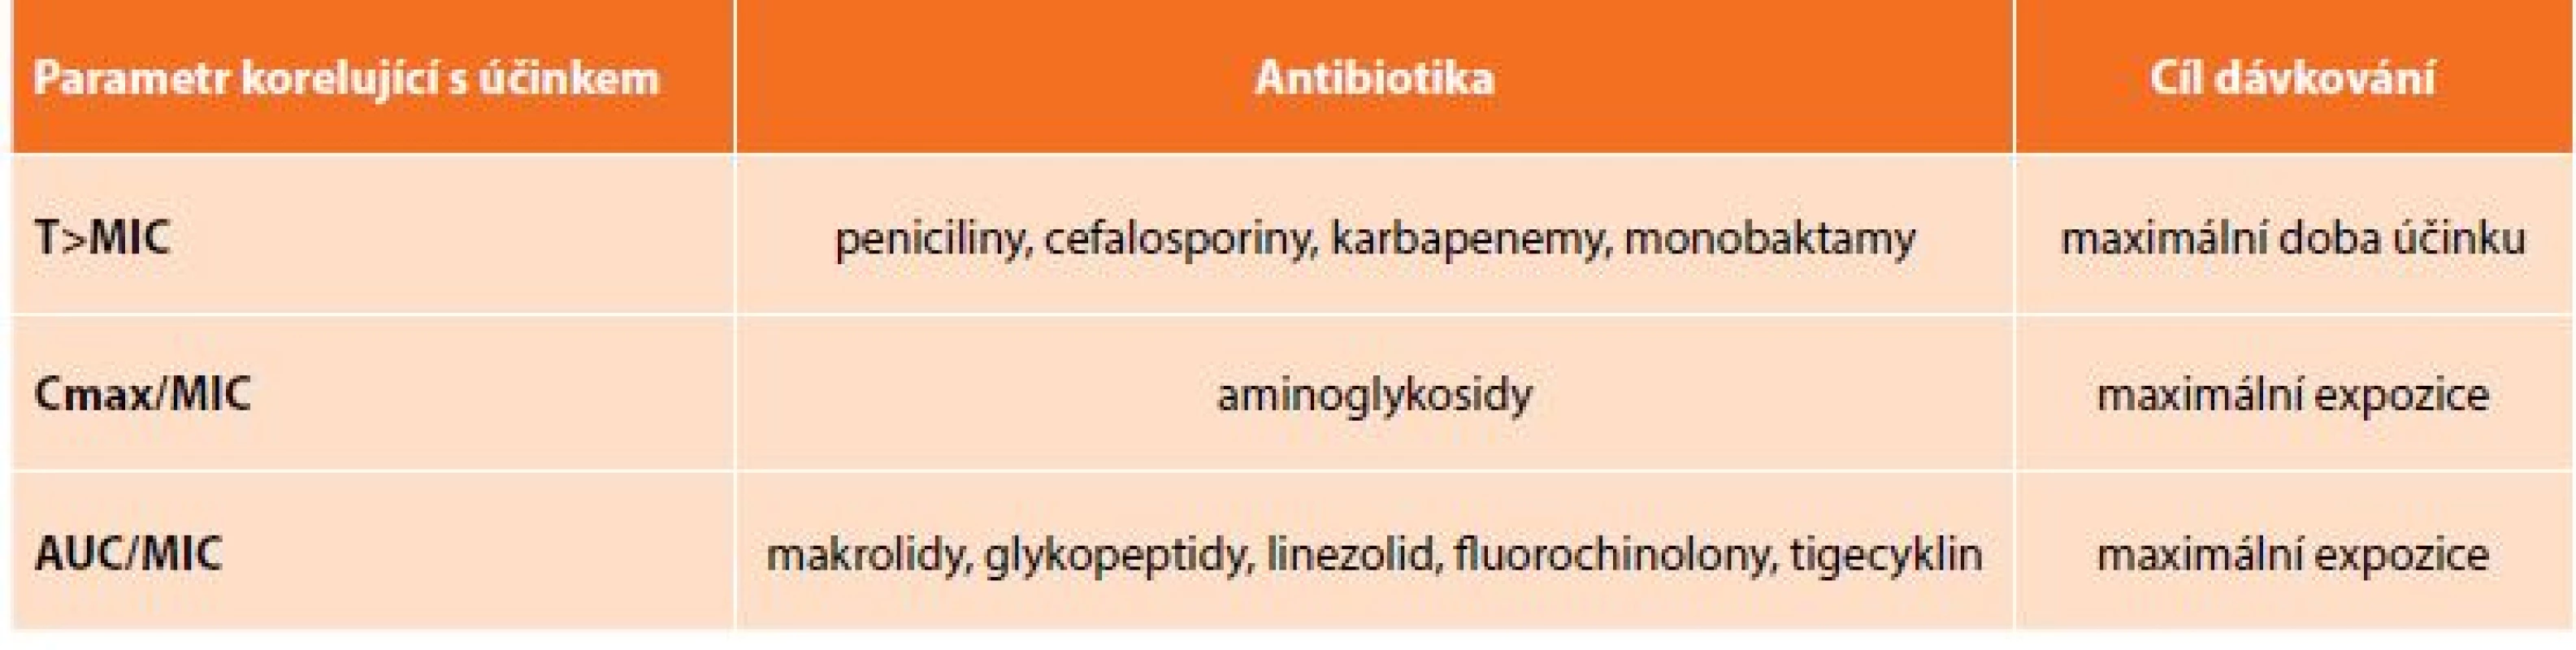 Farmakokinetické a farmakodynamické vlastnosti vybraných antibiotických skupin<br>
Tab. 1: Pharmacokinetic and pharmacodynamic properties of selected antibiotic groups